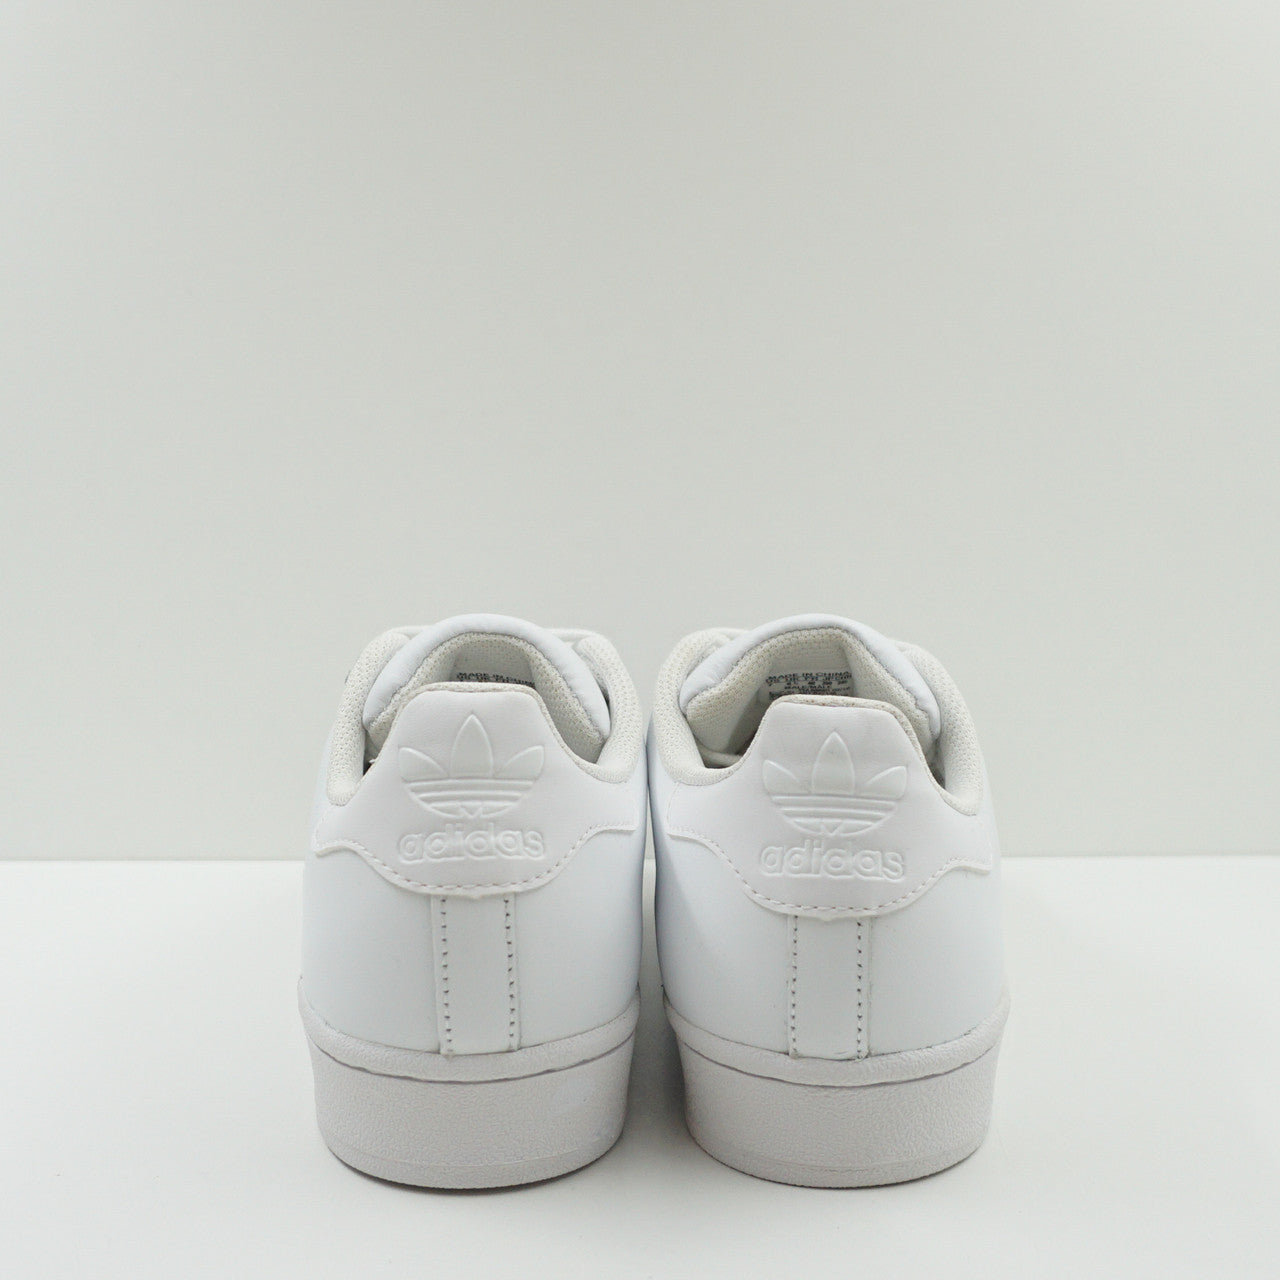 Adidas Superstar Foundation White/White